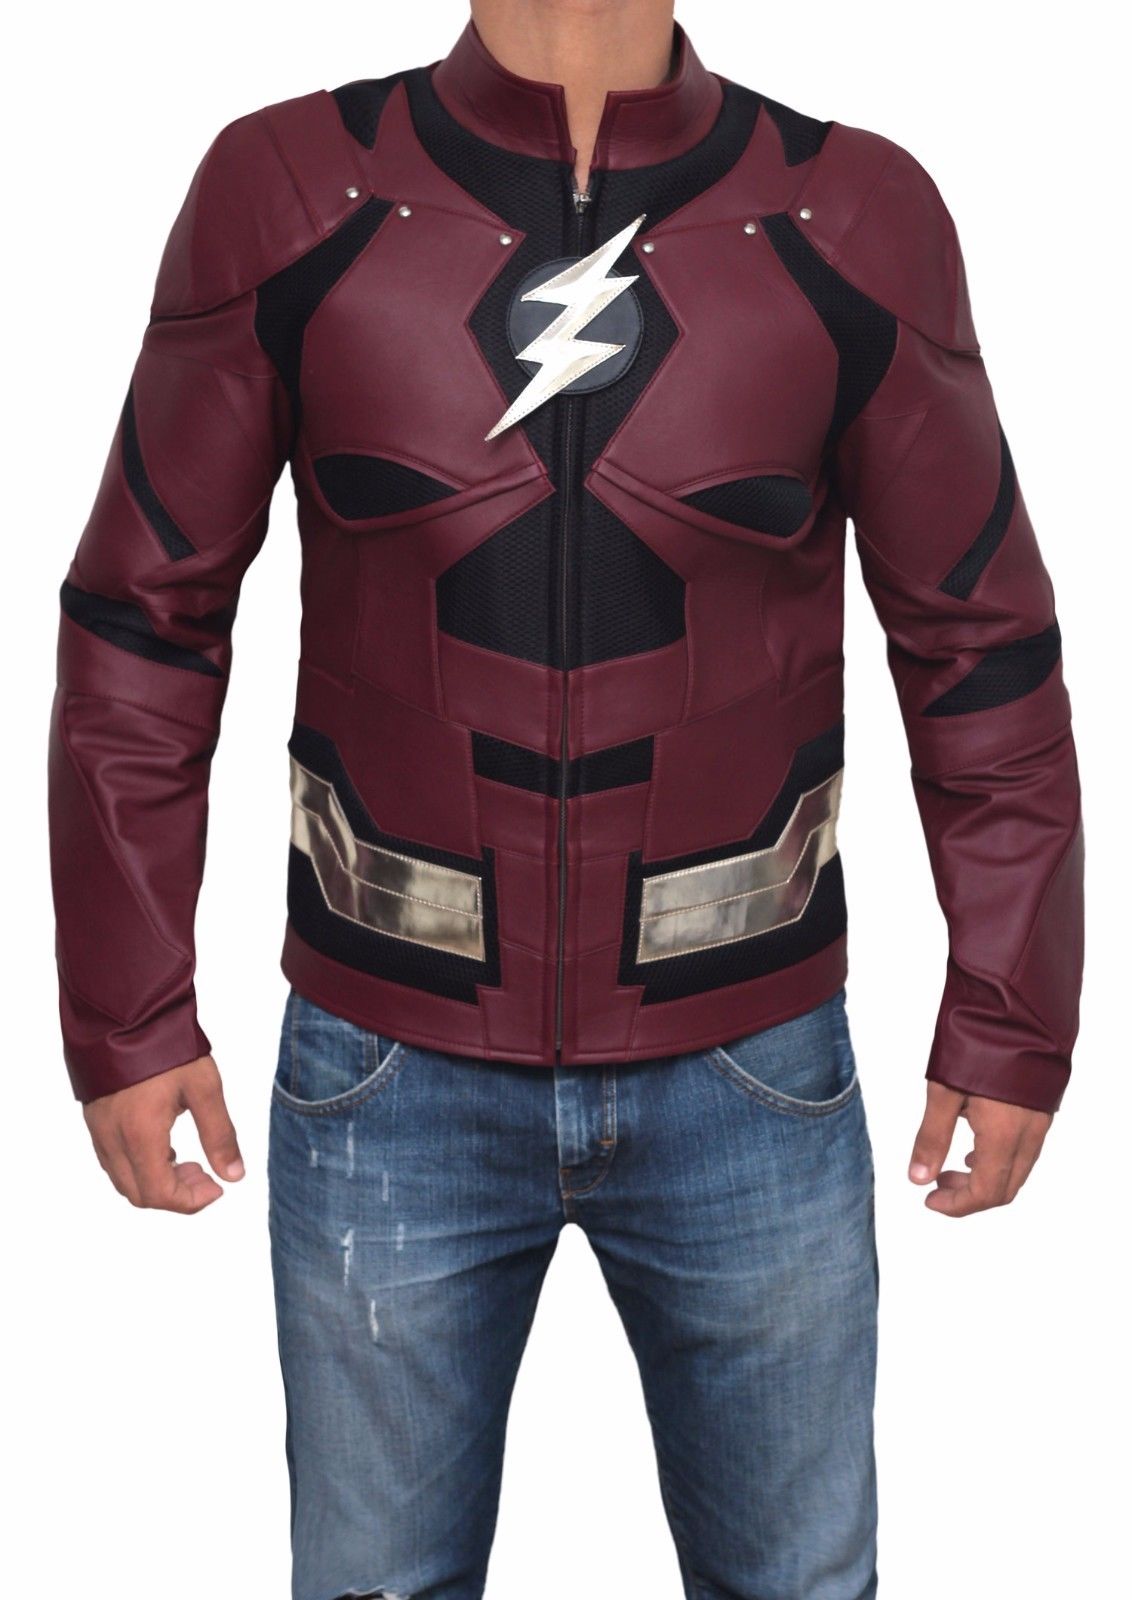 justice league leather jacket